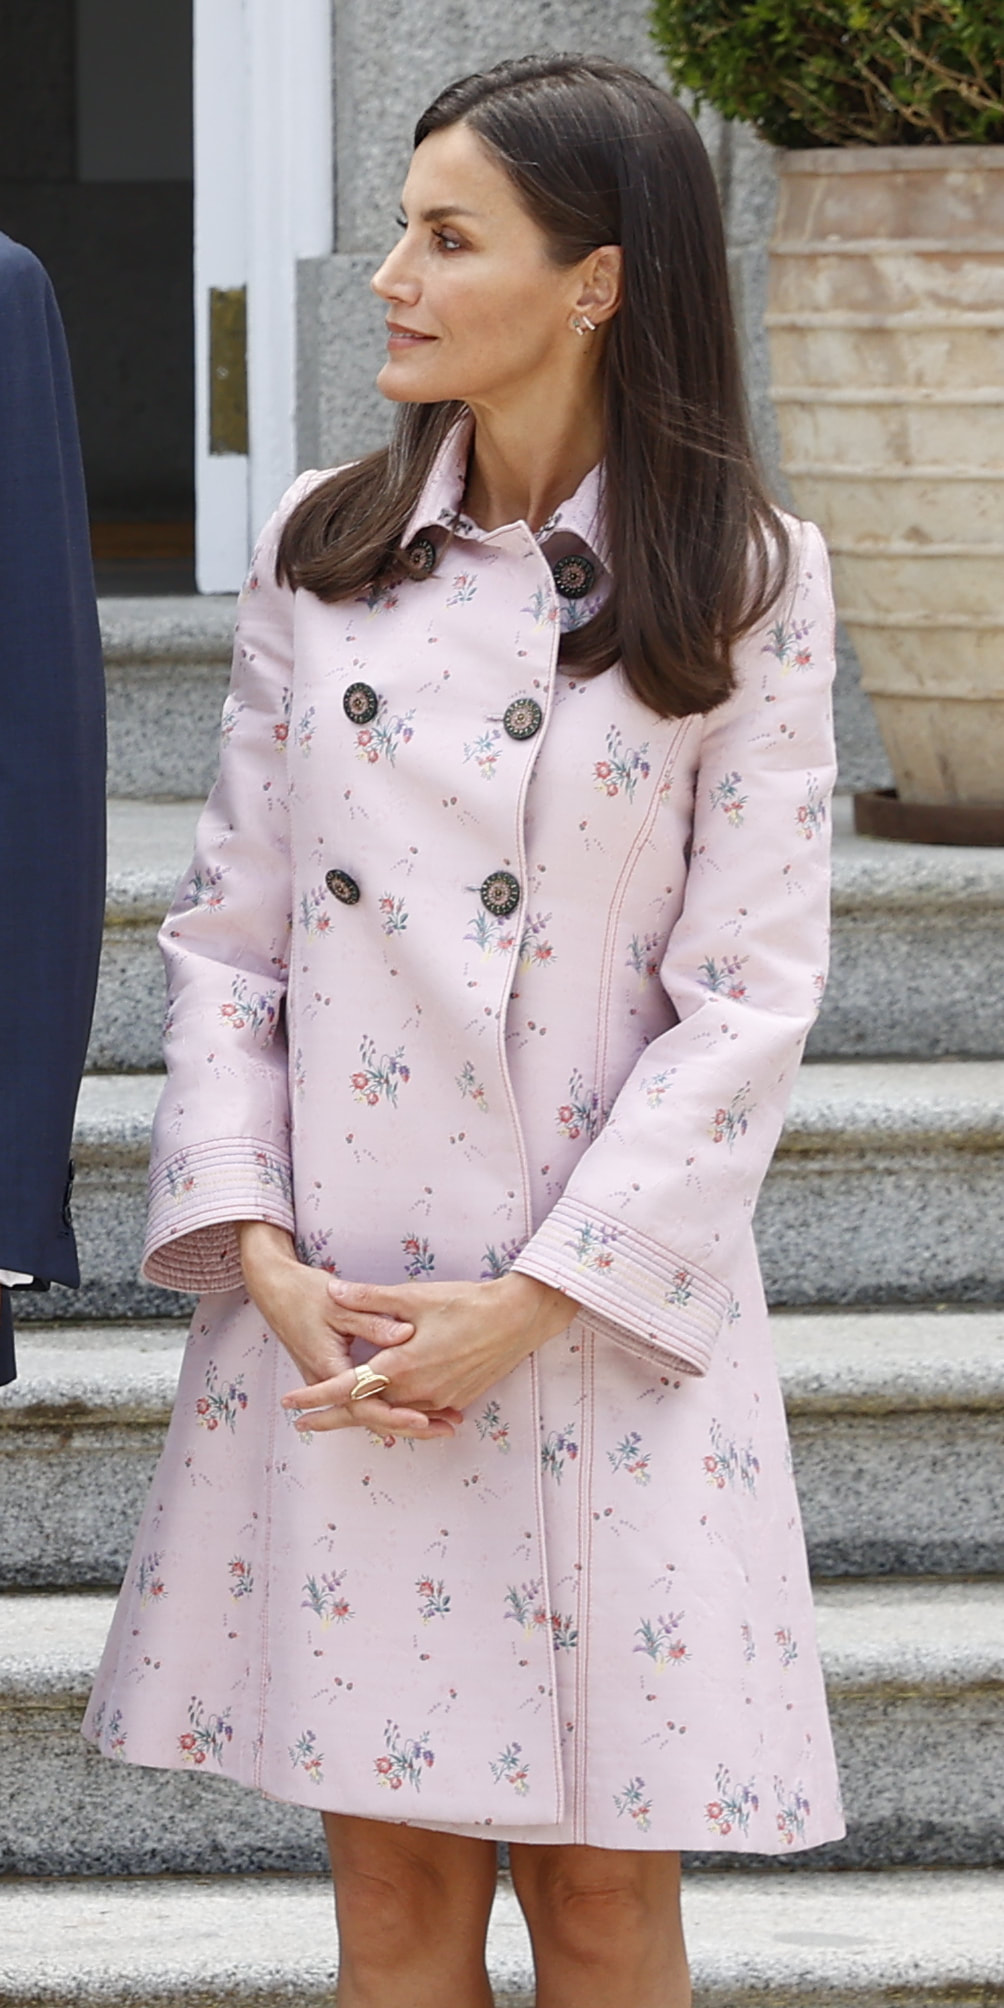 Queen Letizia wears pink Carolina Herrera Orchid Patterned Coat Pre-Fall 2018